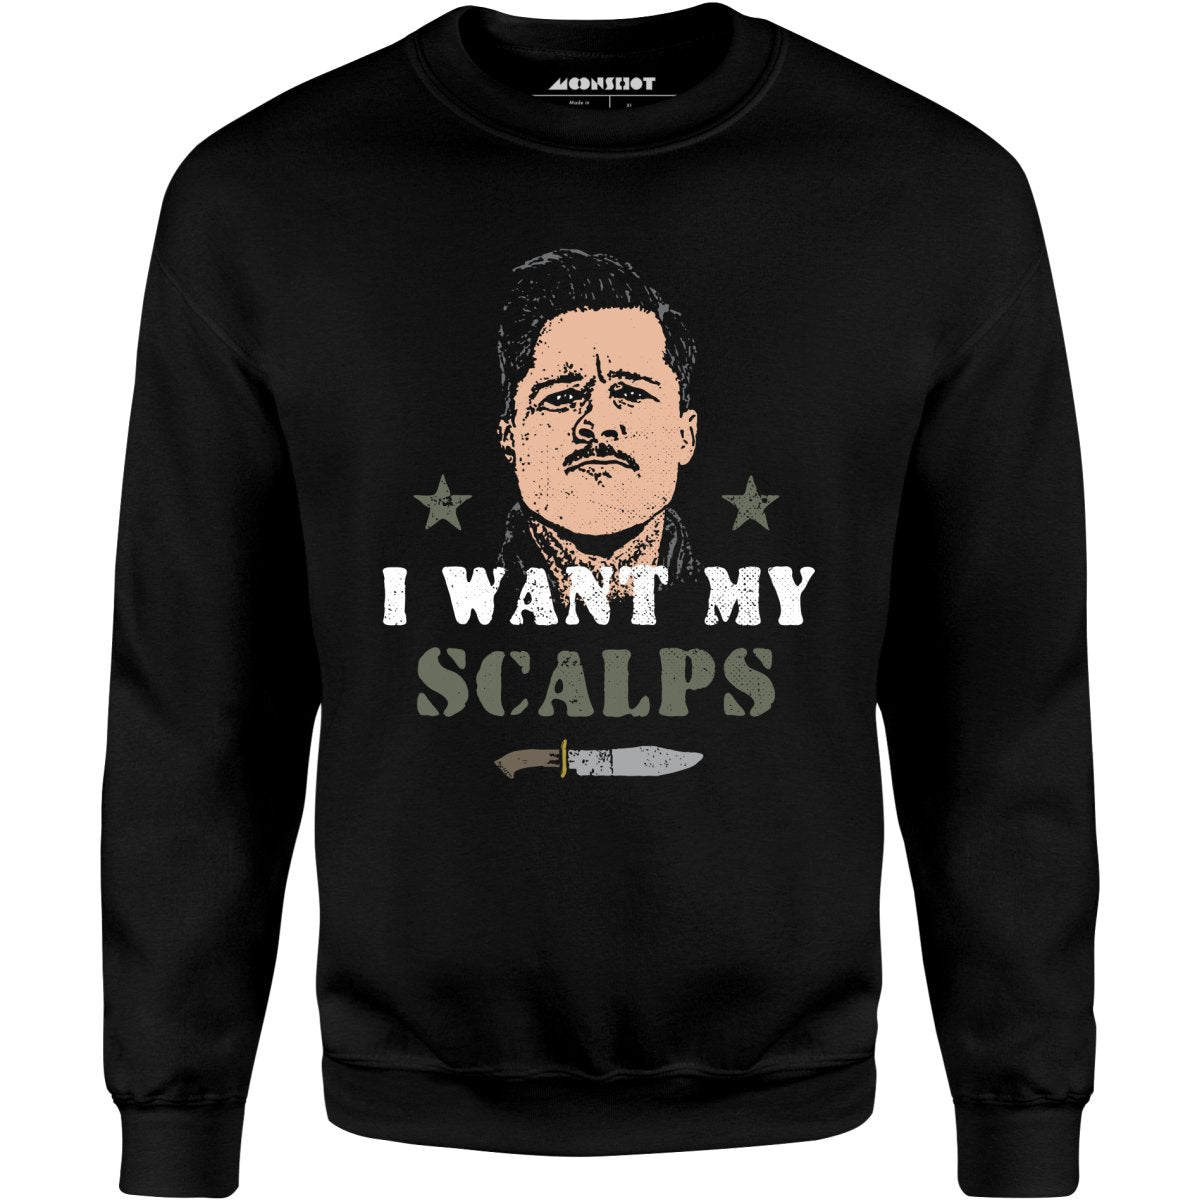 Aldo Raine - I Want My Scalps - Unisex Sweatshirt